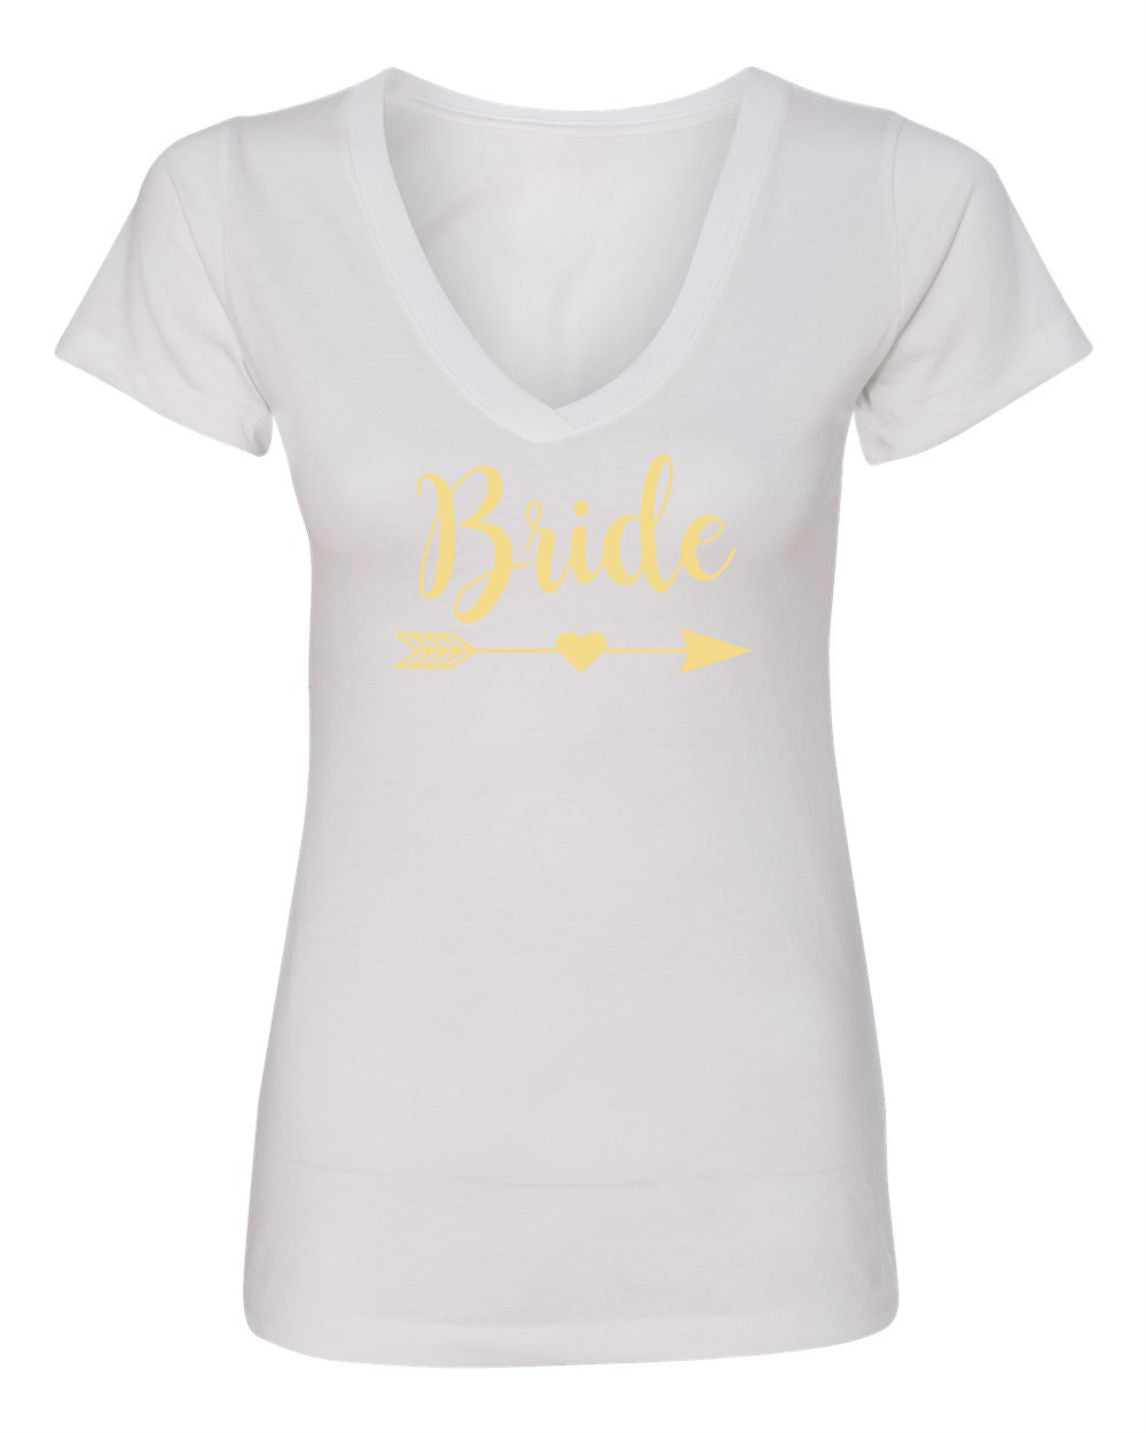 "Bride" (Arrow Heart Design) T-Shirt